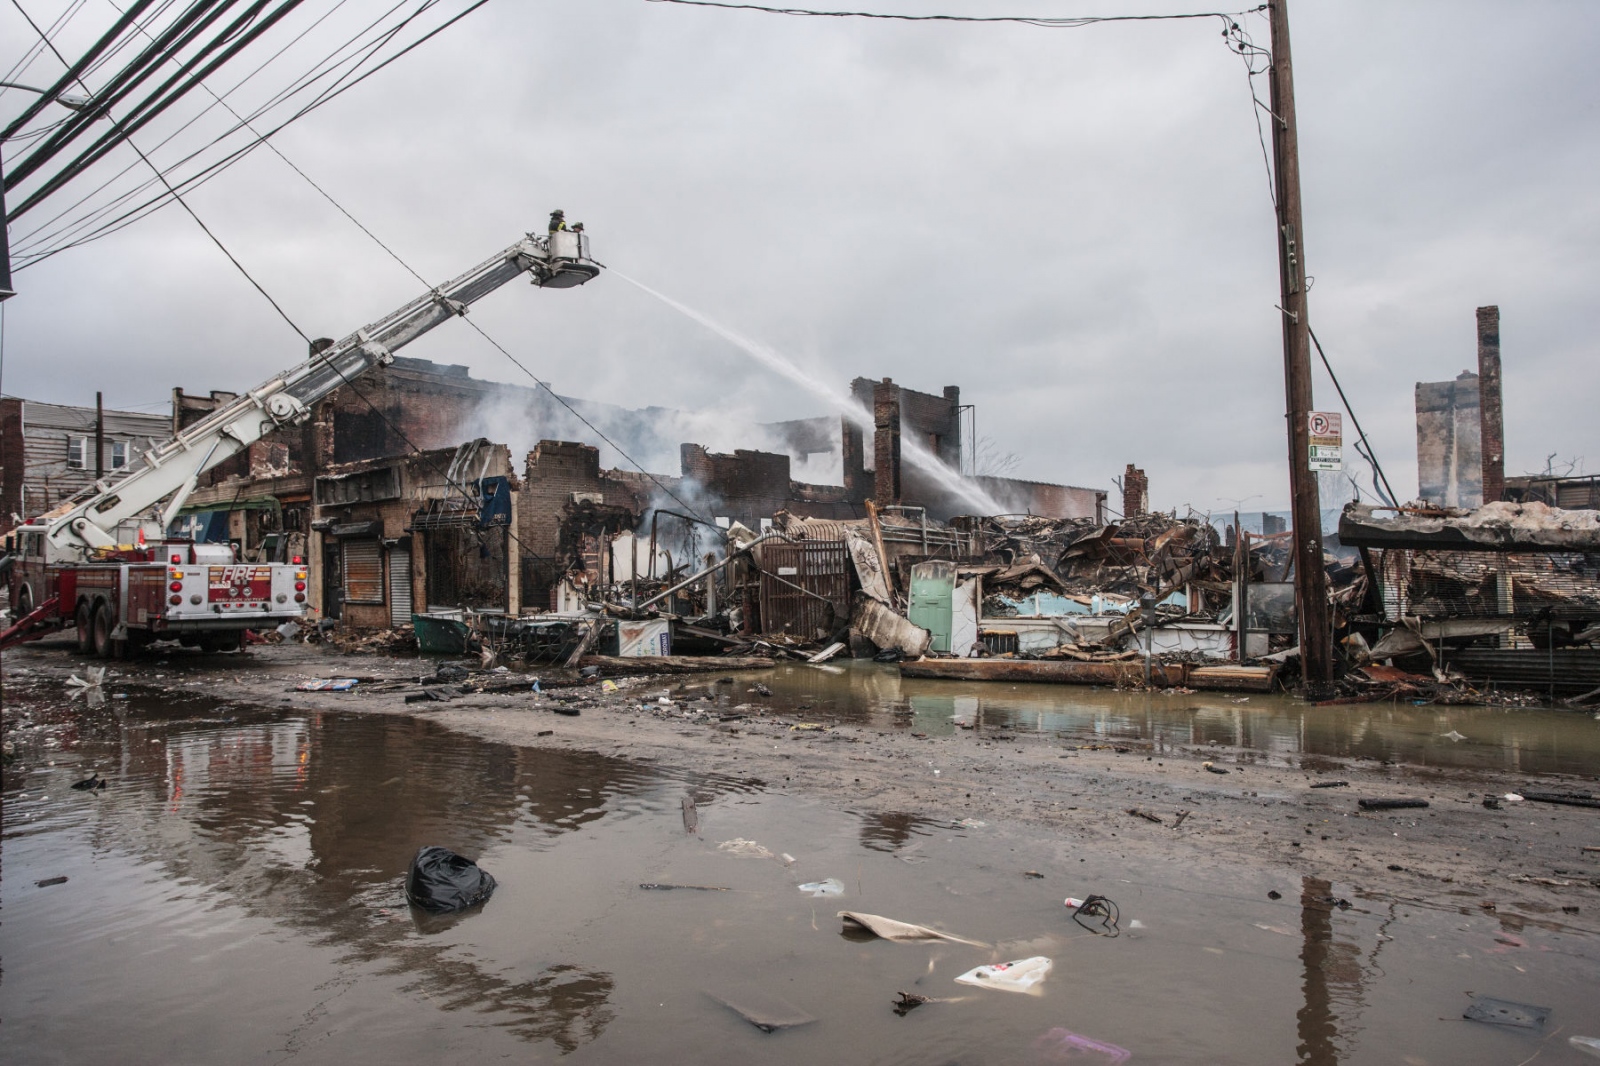 The Rockaways After Hurricane Sandy - Firemen put out fires on Bay Blvd. after Hurricane Sandy. 